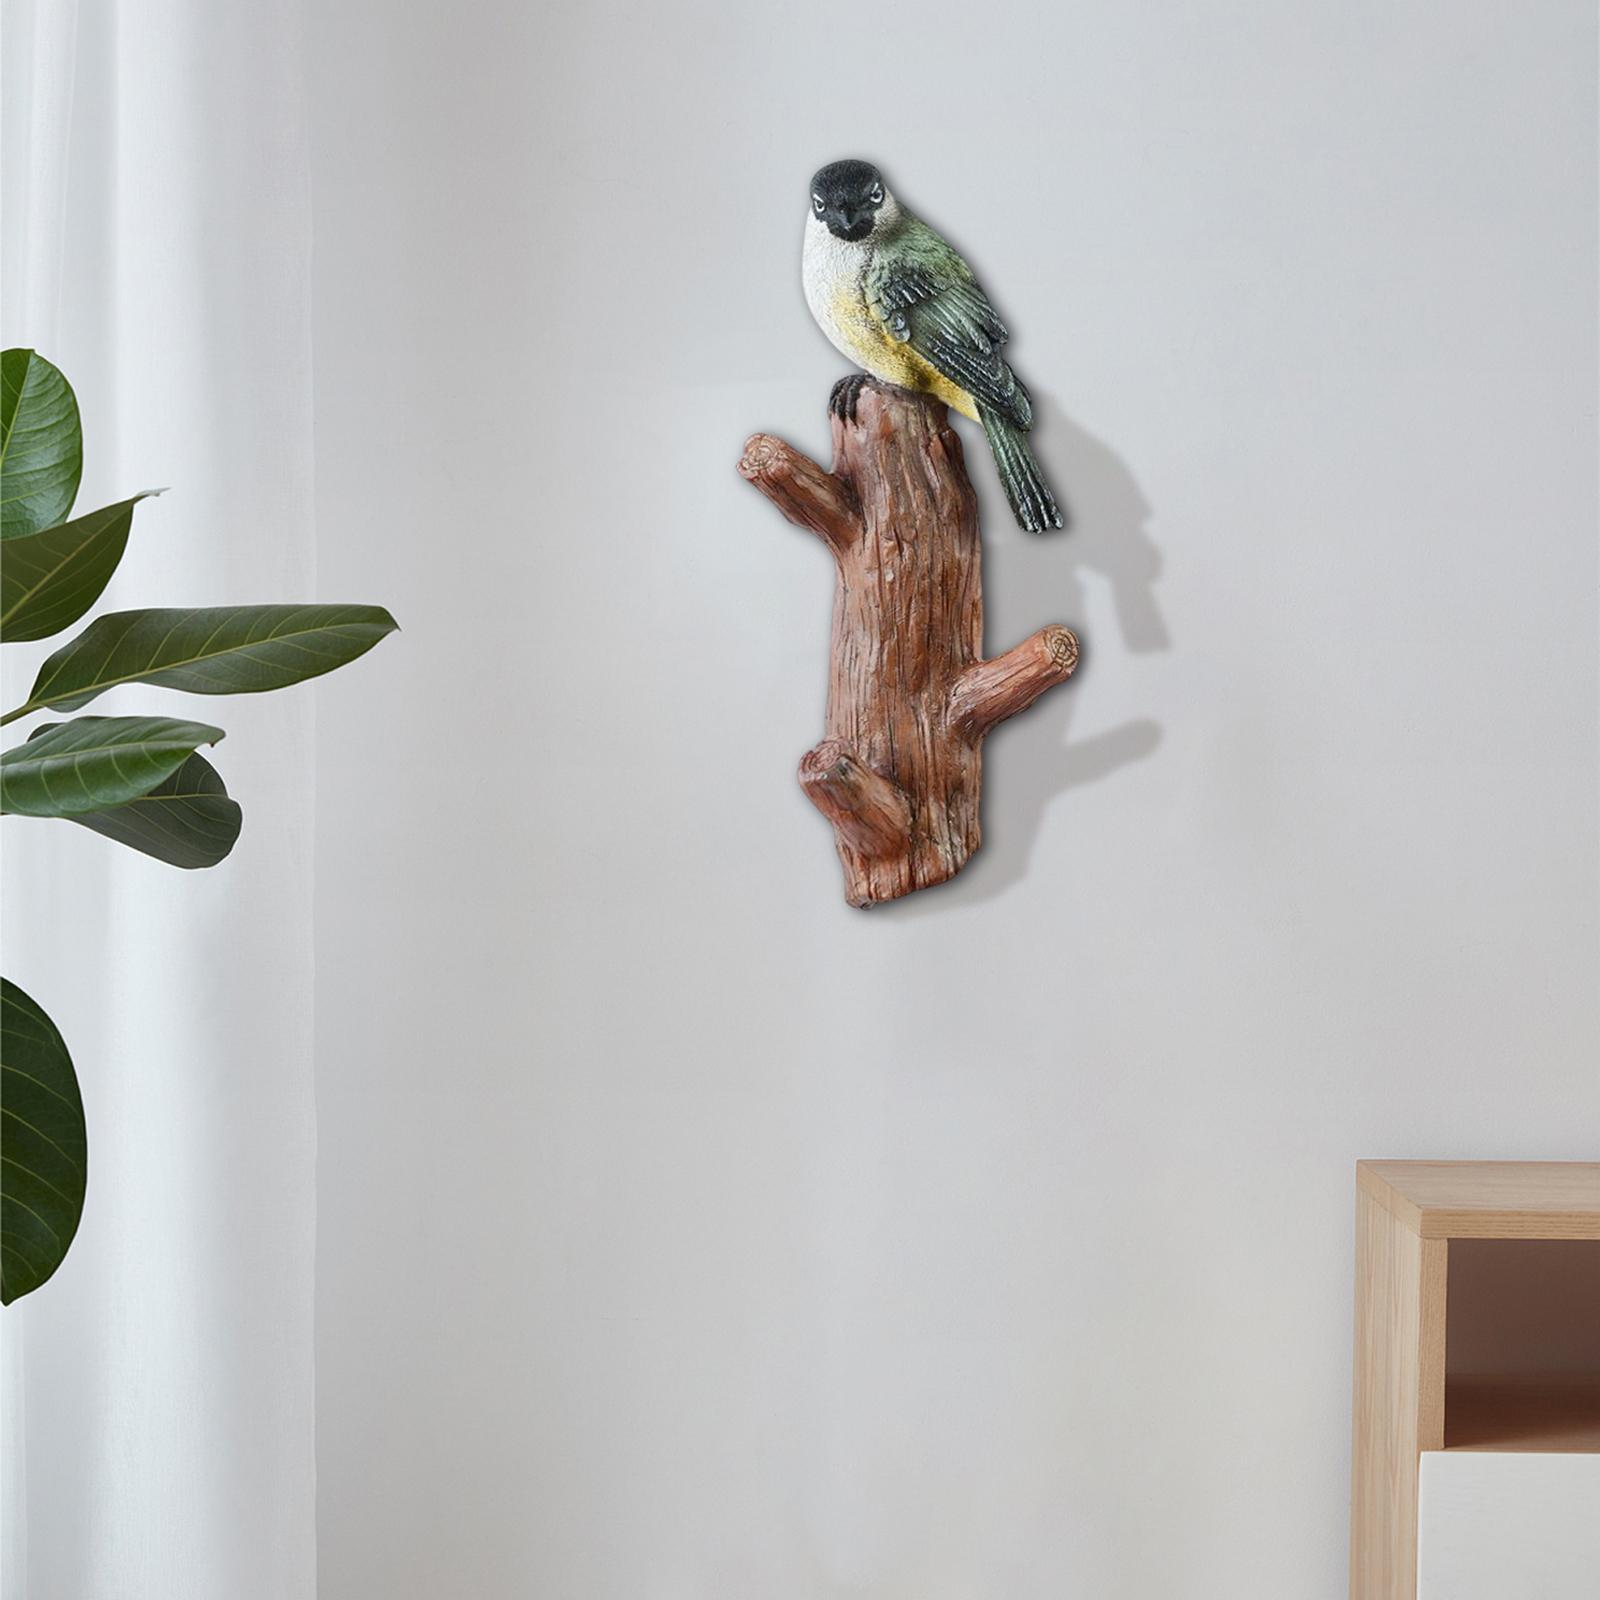 Resin Bird Wall Hooks Decorative Clothes Hanger for Bags Bedroom Kitchen Green Bird